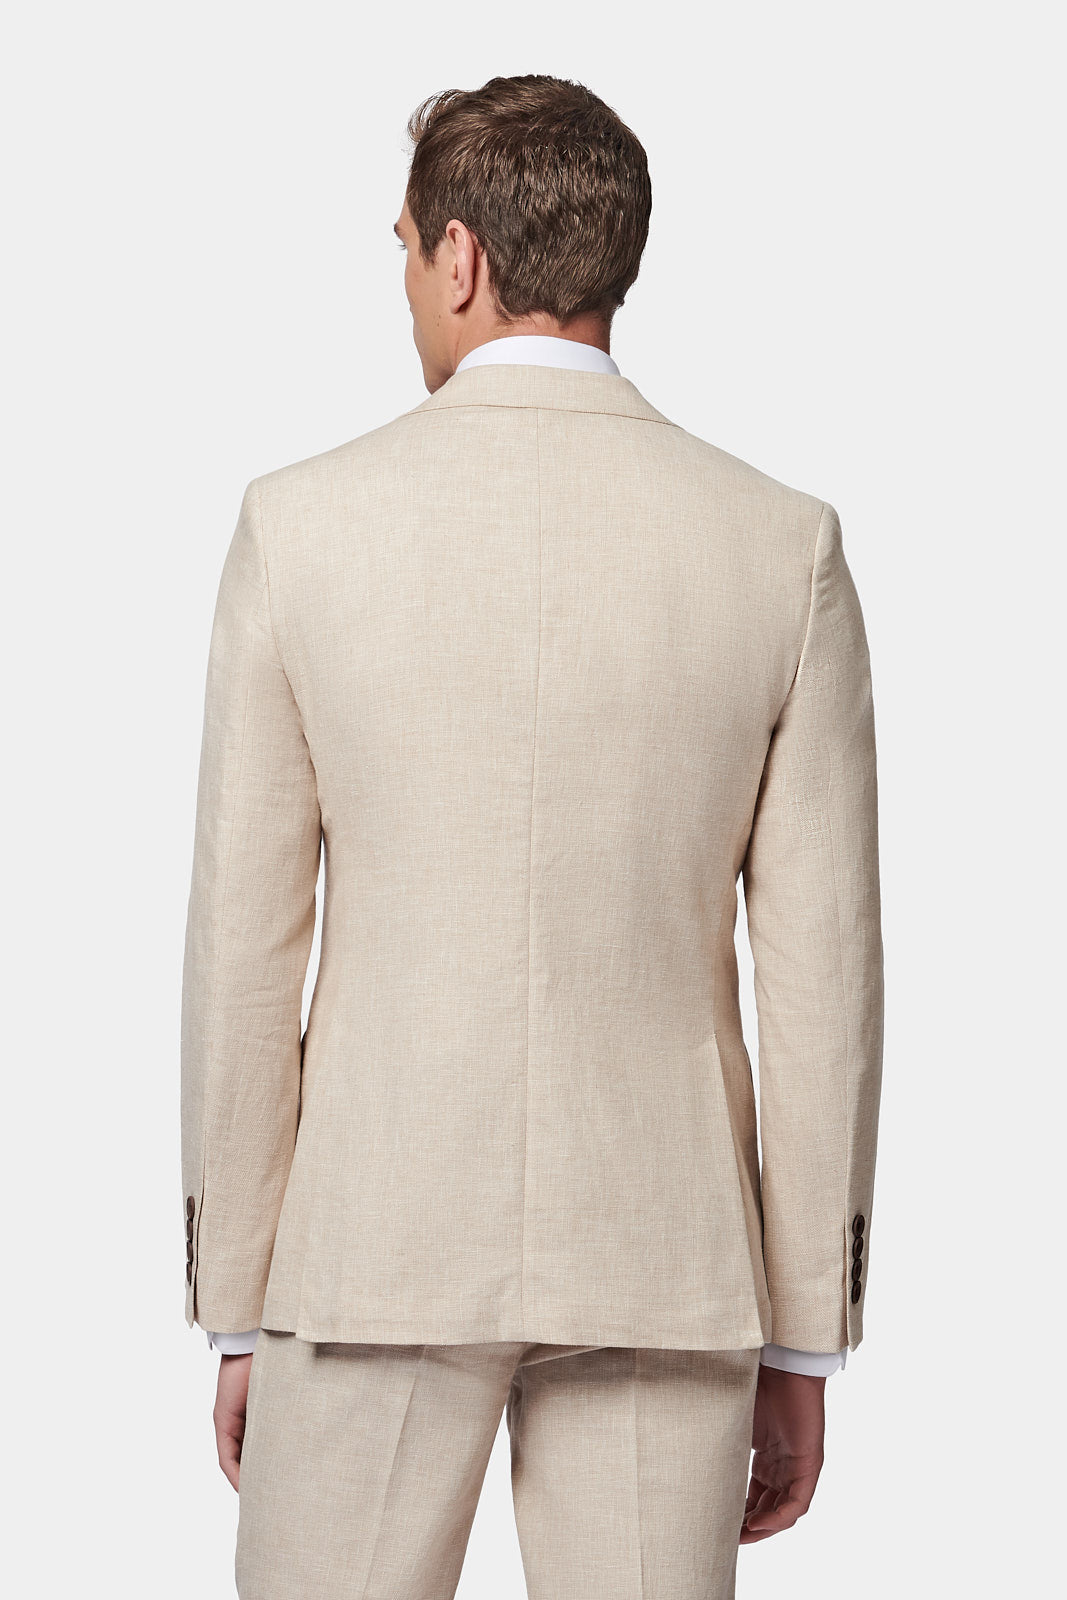 Linen Blend Classic Three Piece Suit in Egret